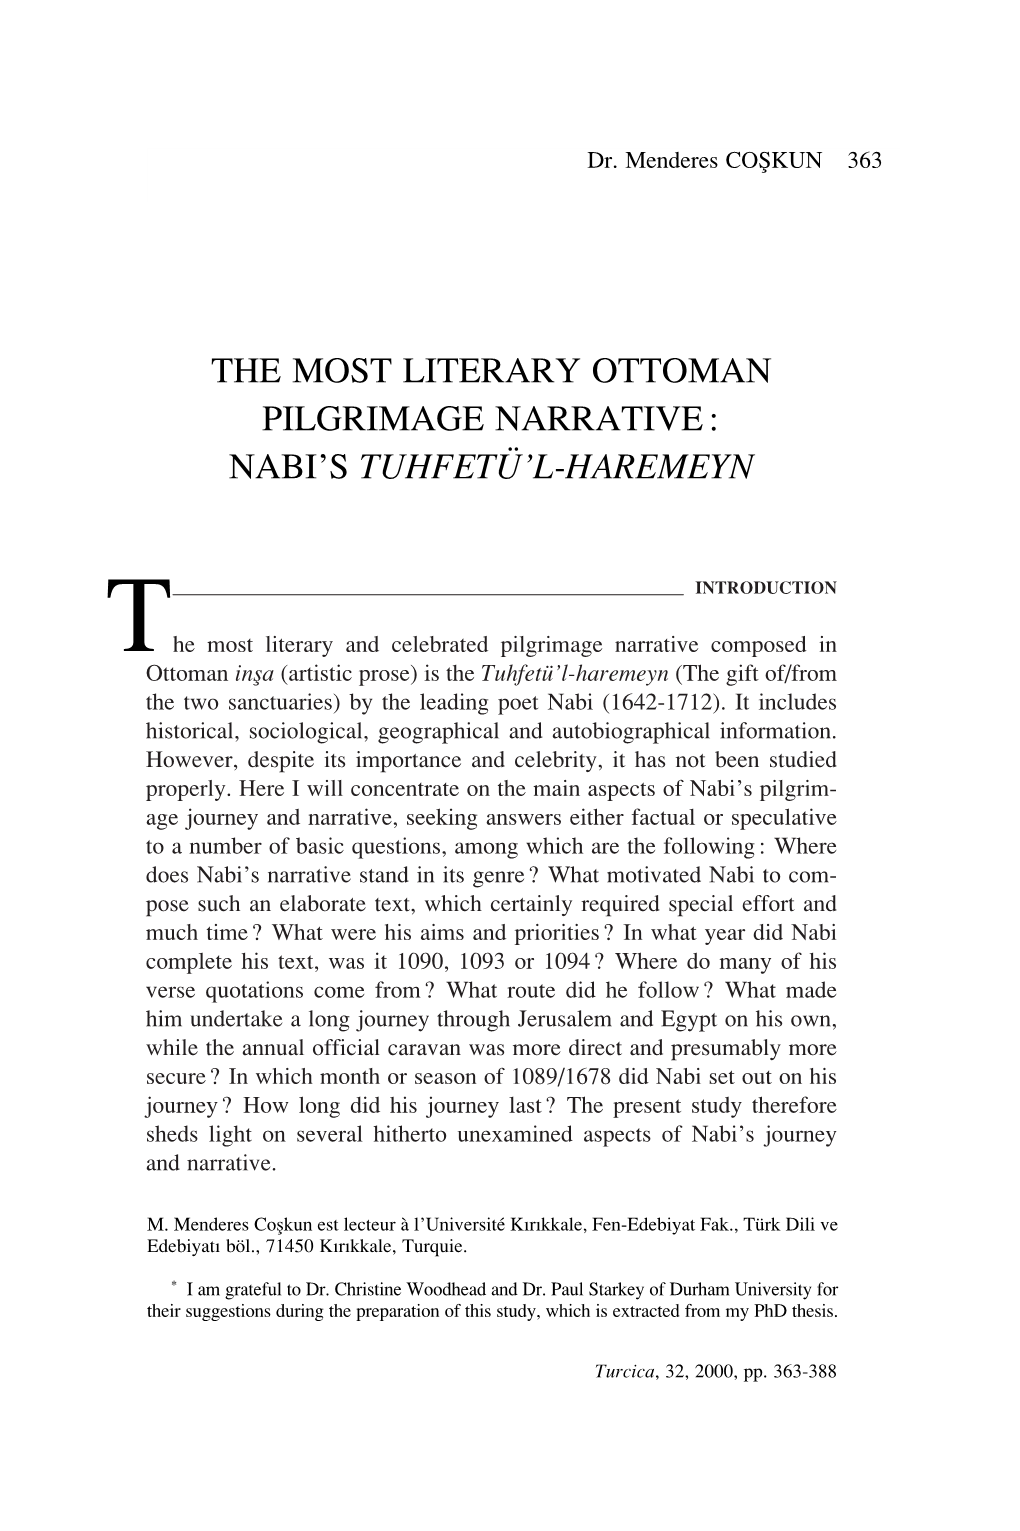 The Most Literary Ottoman Pilgrimage Narrative: Nabi's Tuhfetü'l-Haremeyn